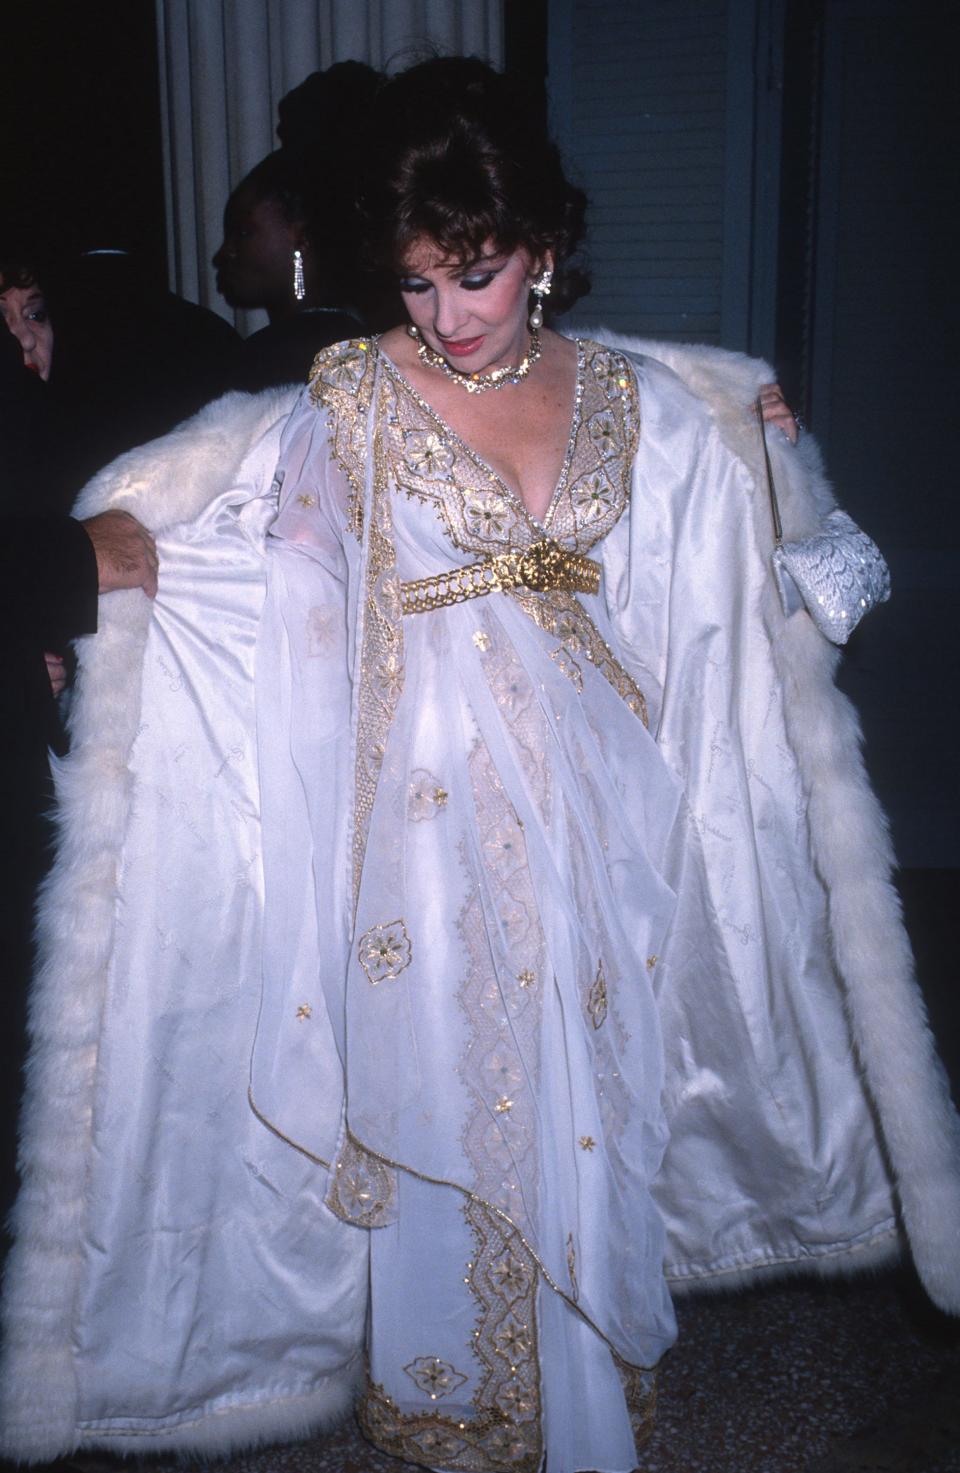 Italian actress Gina Lollobrigida at the Met Gala in 1988.